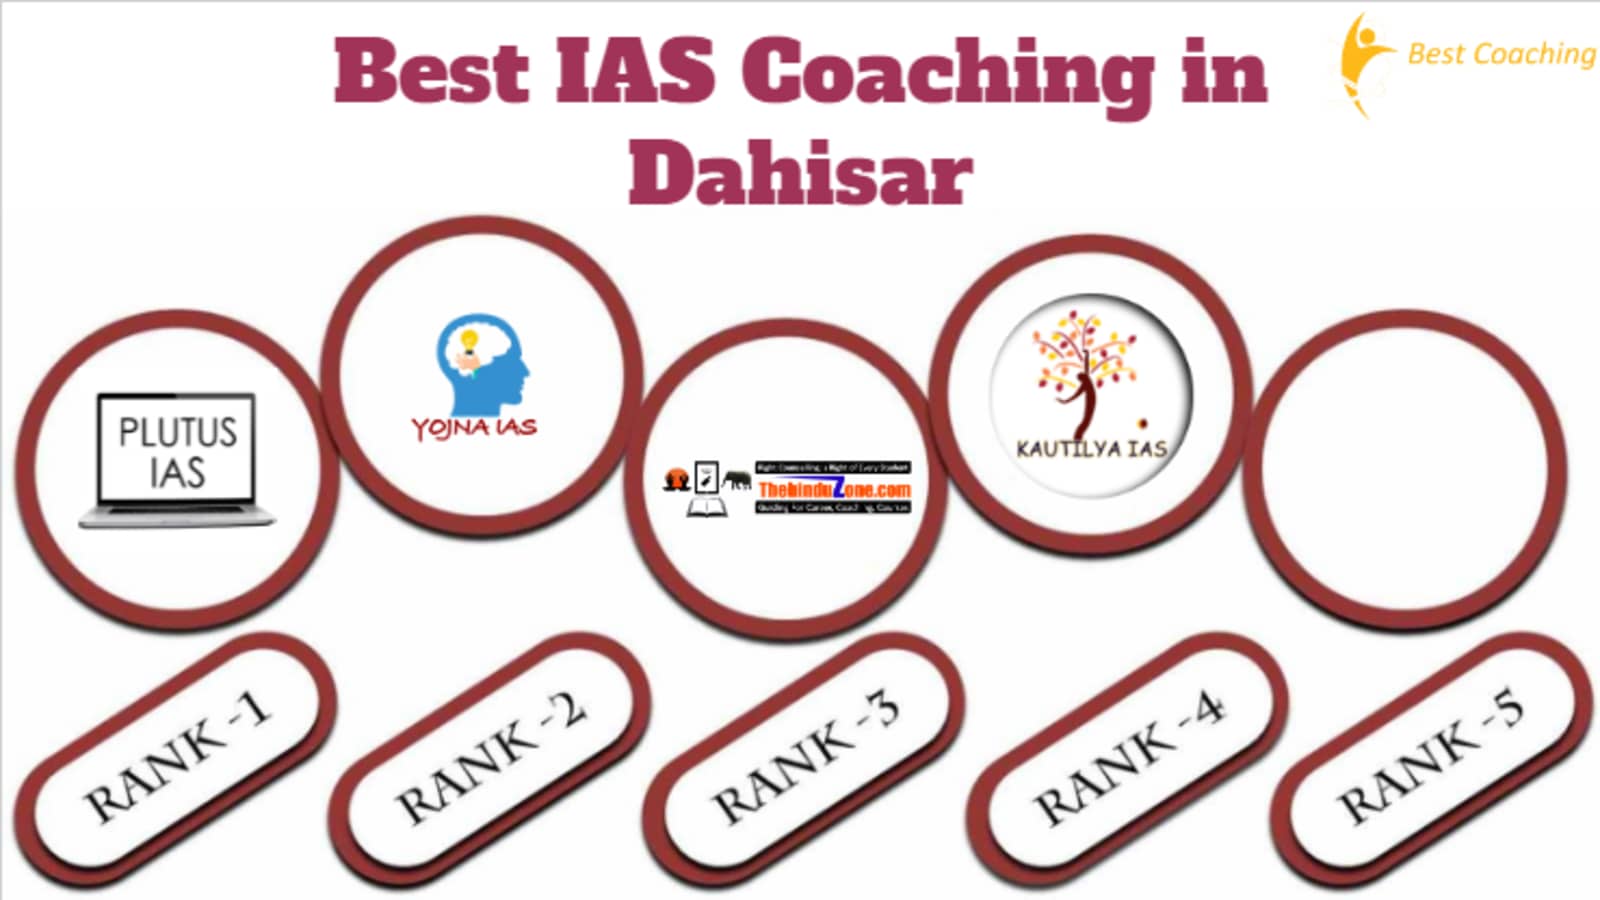 Best IAS Coaching in Dahisar